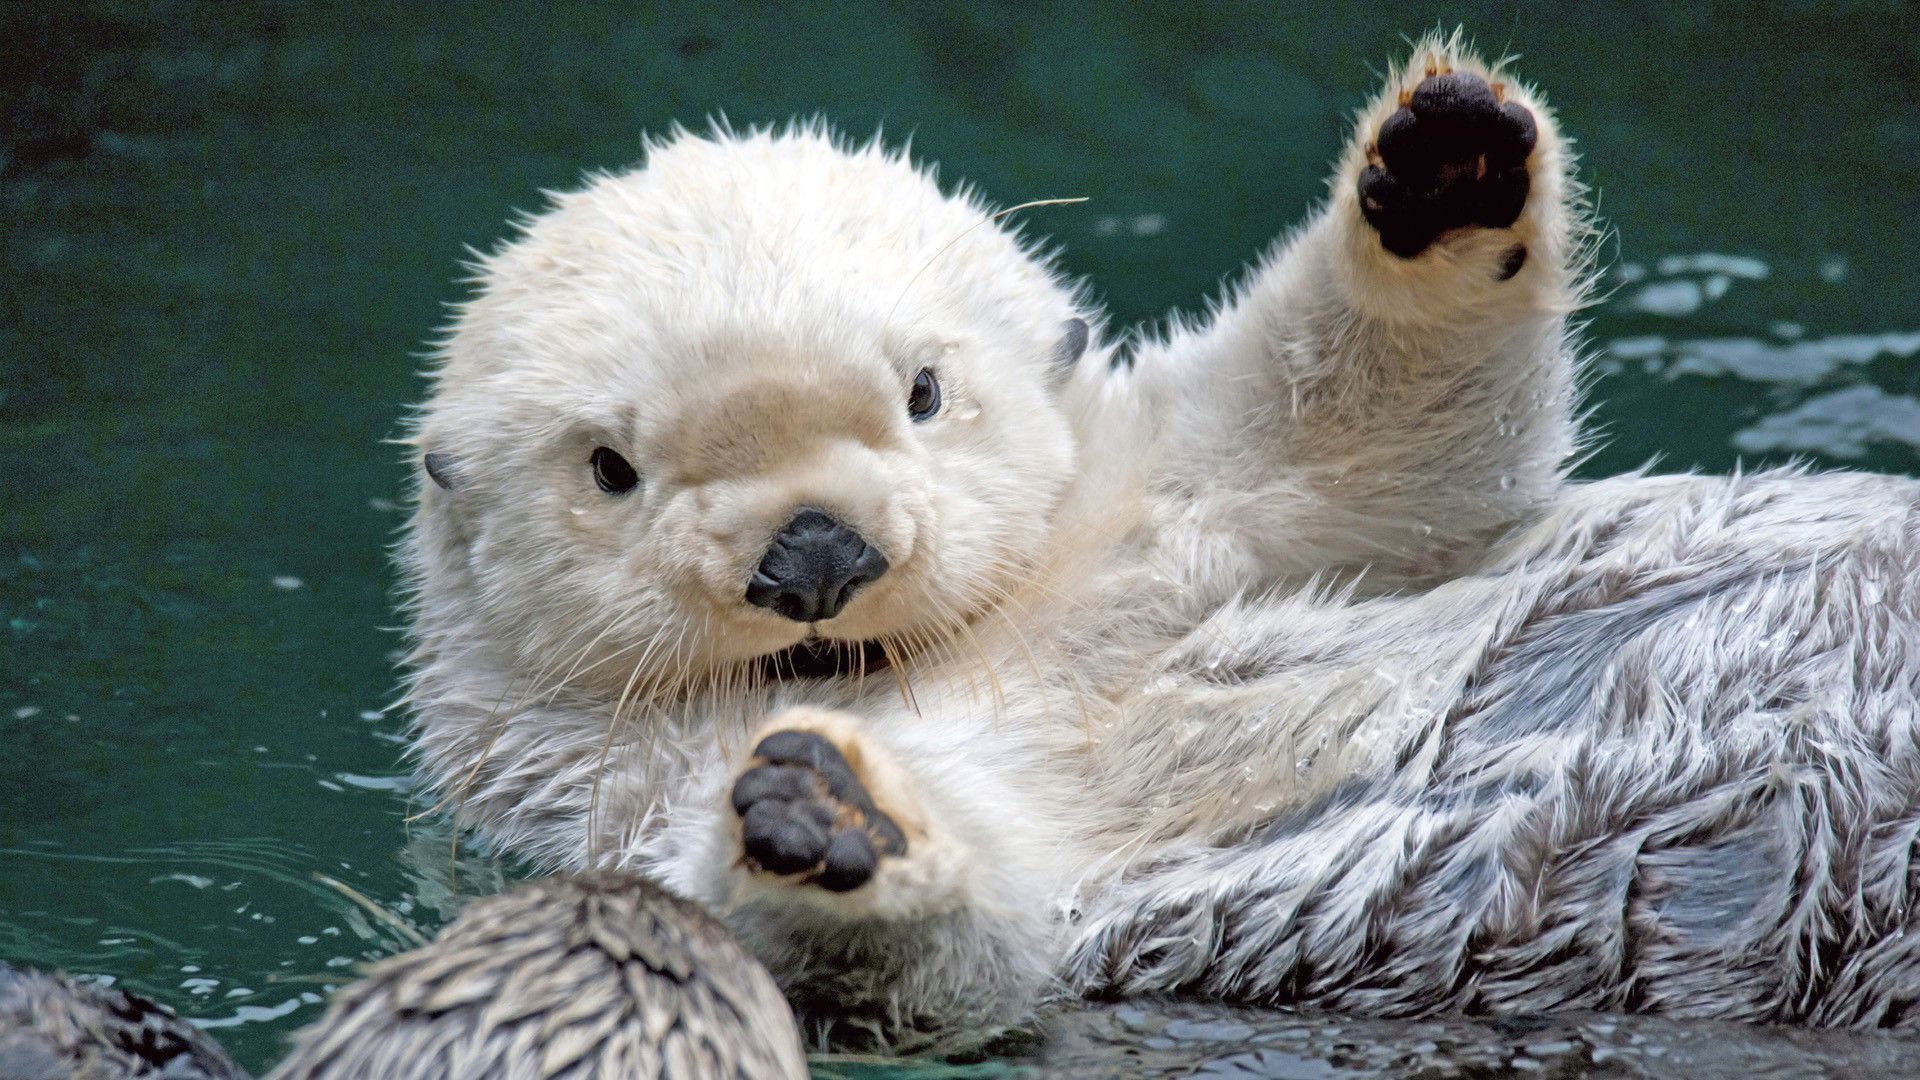 Sea Otter Wallpaper. Animals, Cute animals, Baby sea otters